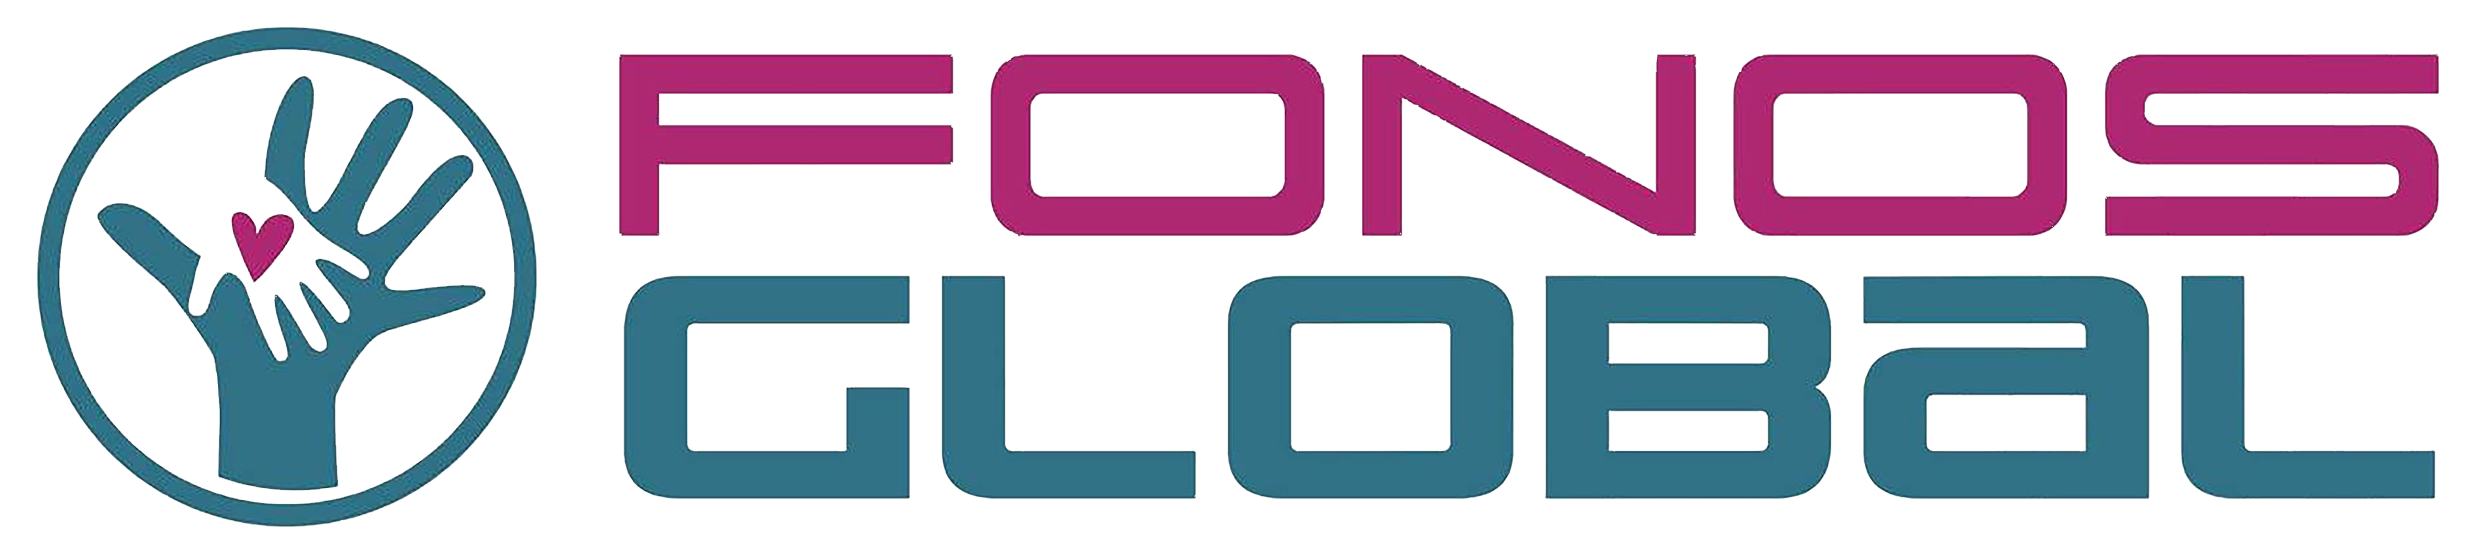 Logotipo FonosGlobal